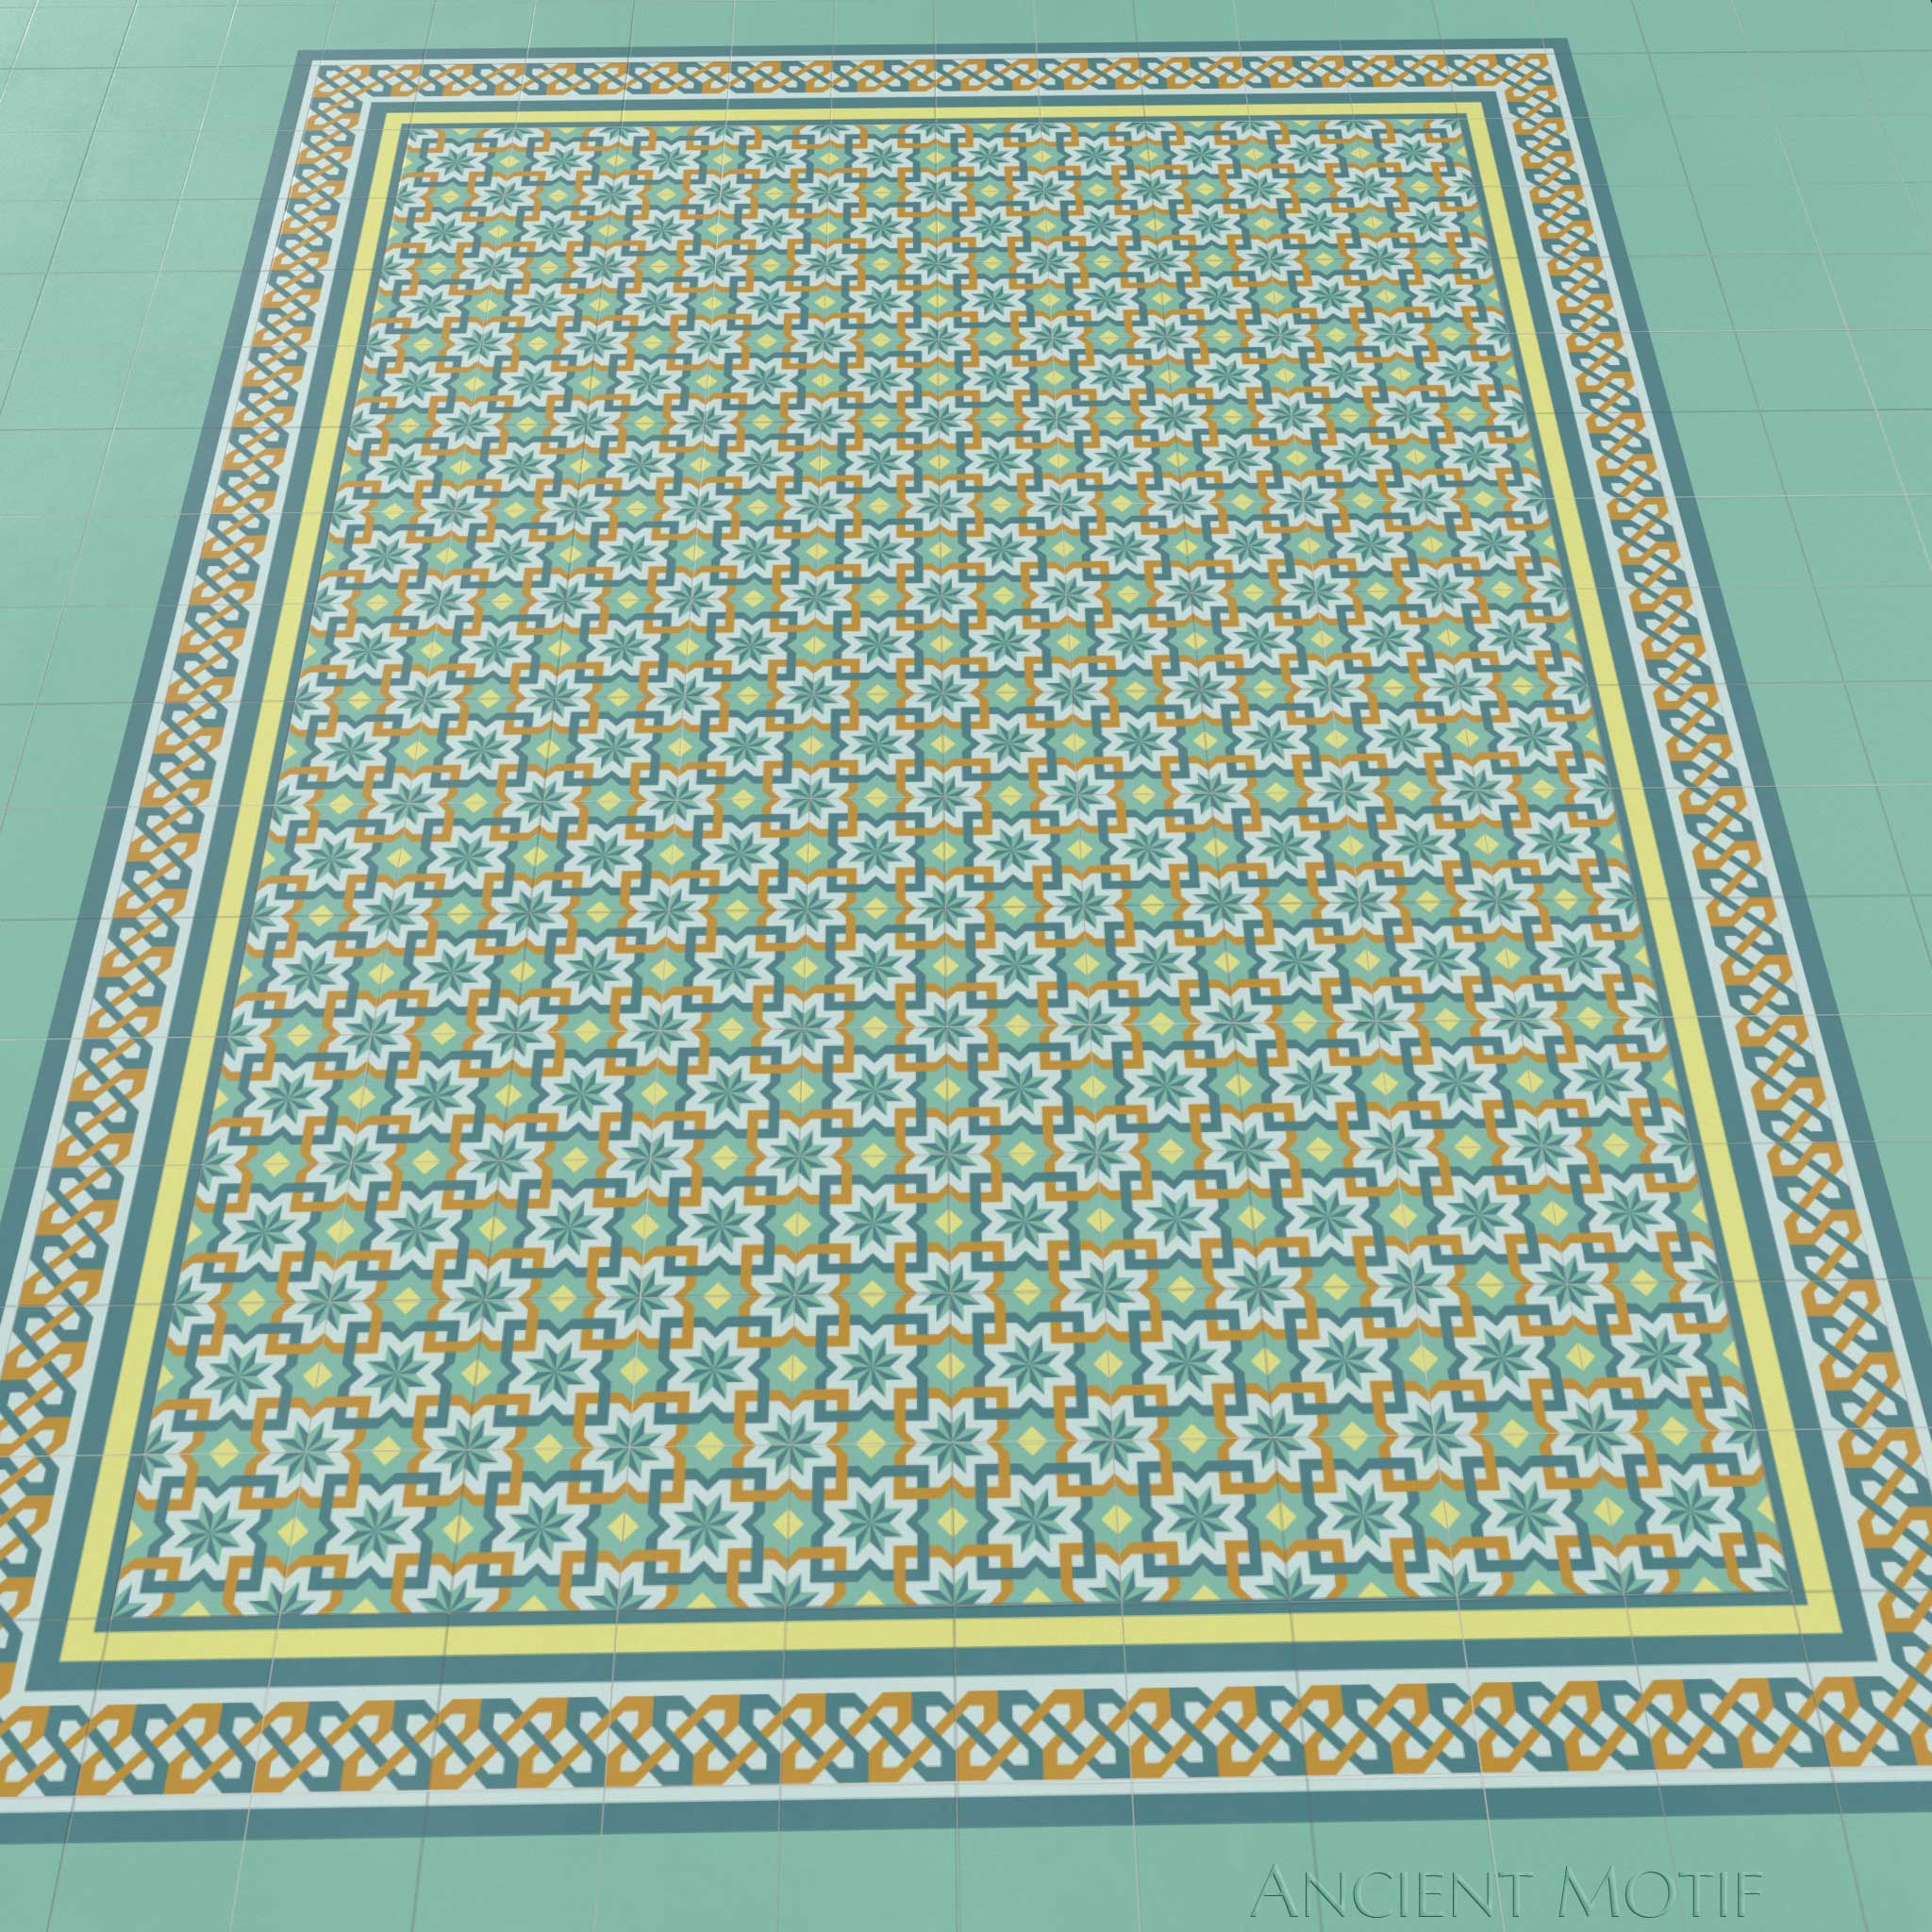 Seville Encaustic Cement Tile Floor in Lemon, Teal and Mint